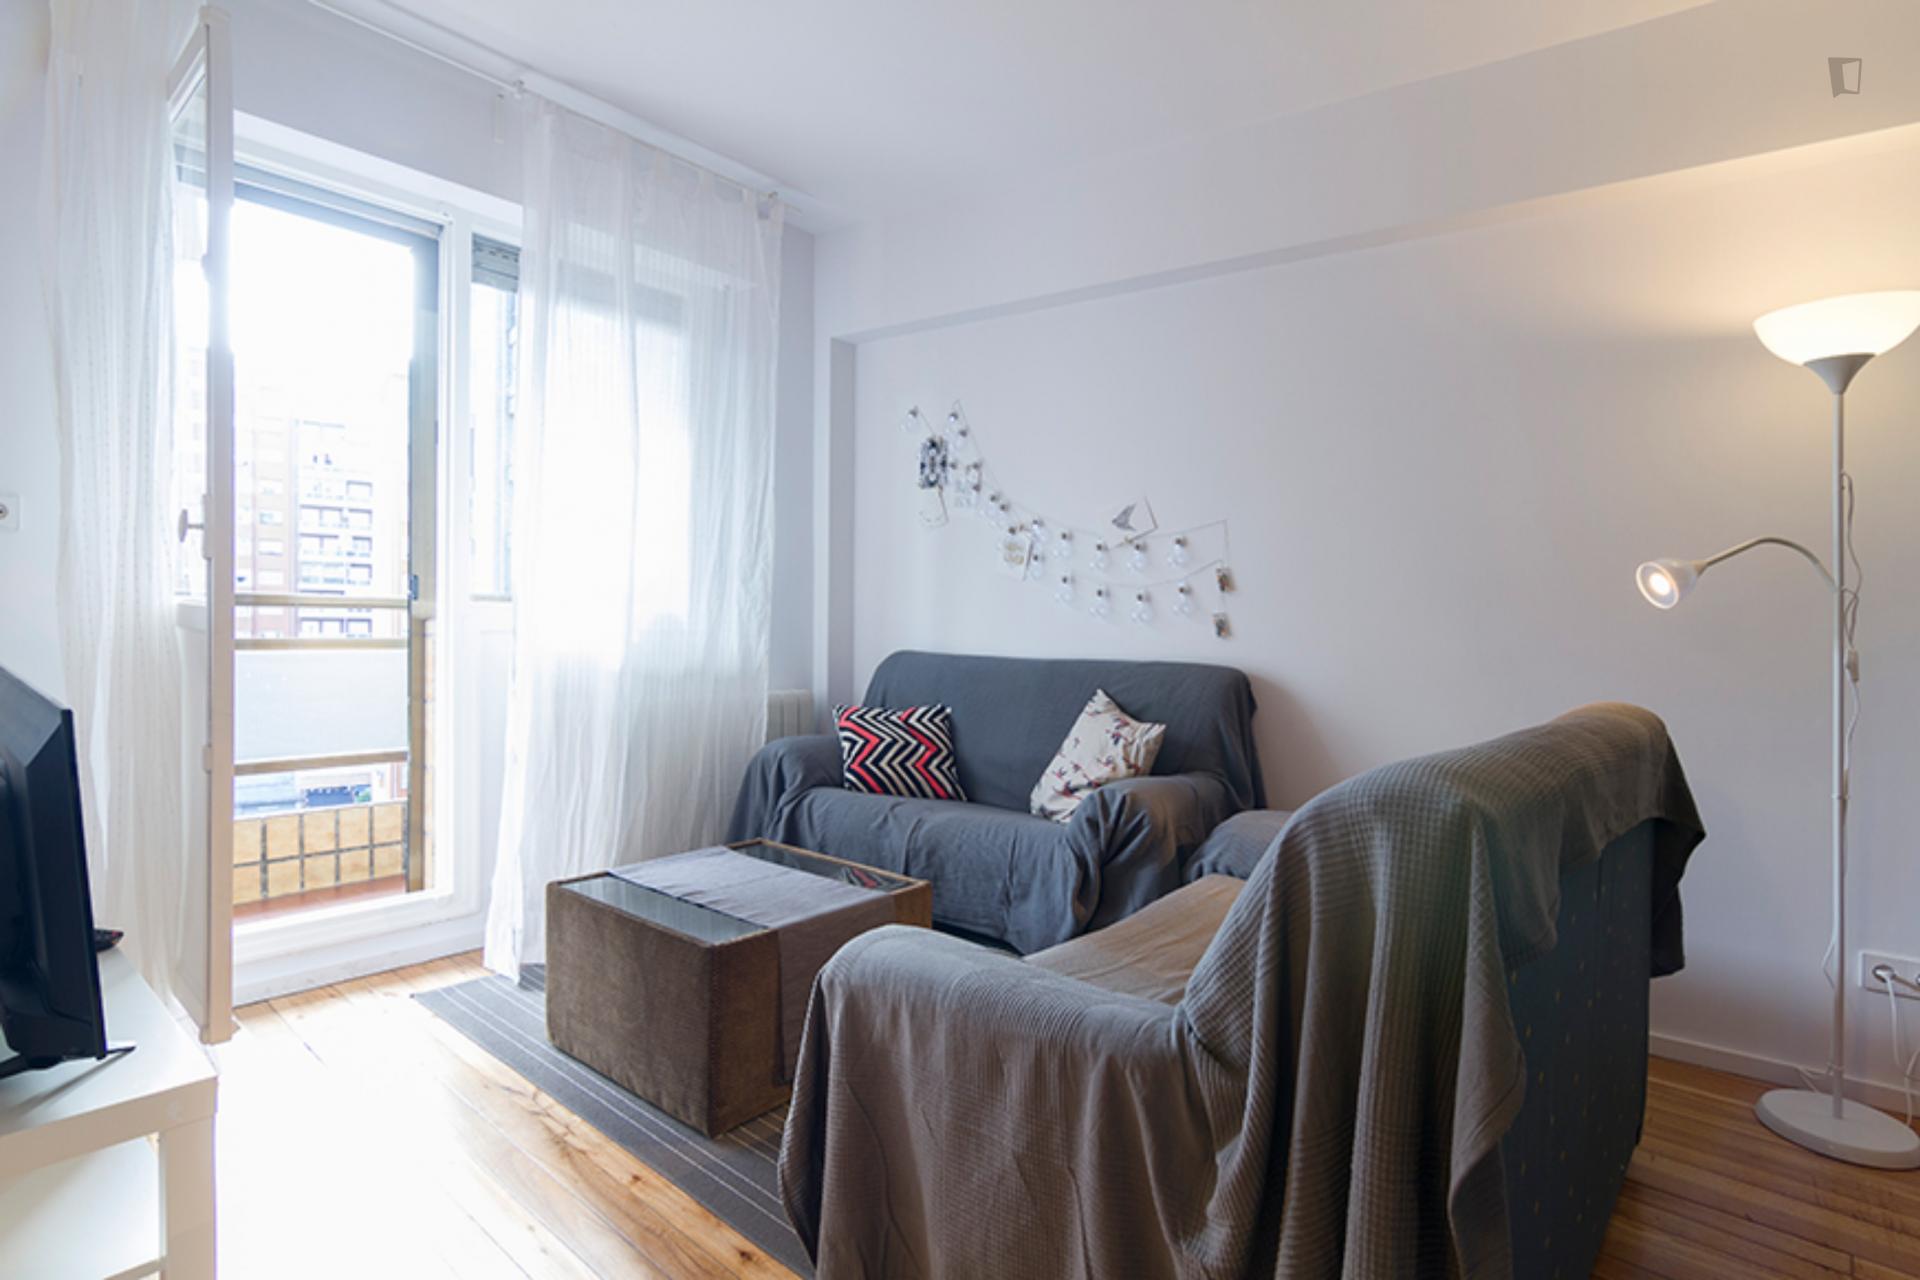 Kalea 19- Elegant Room in shared flat